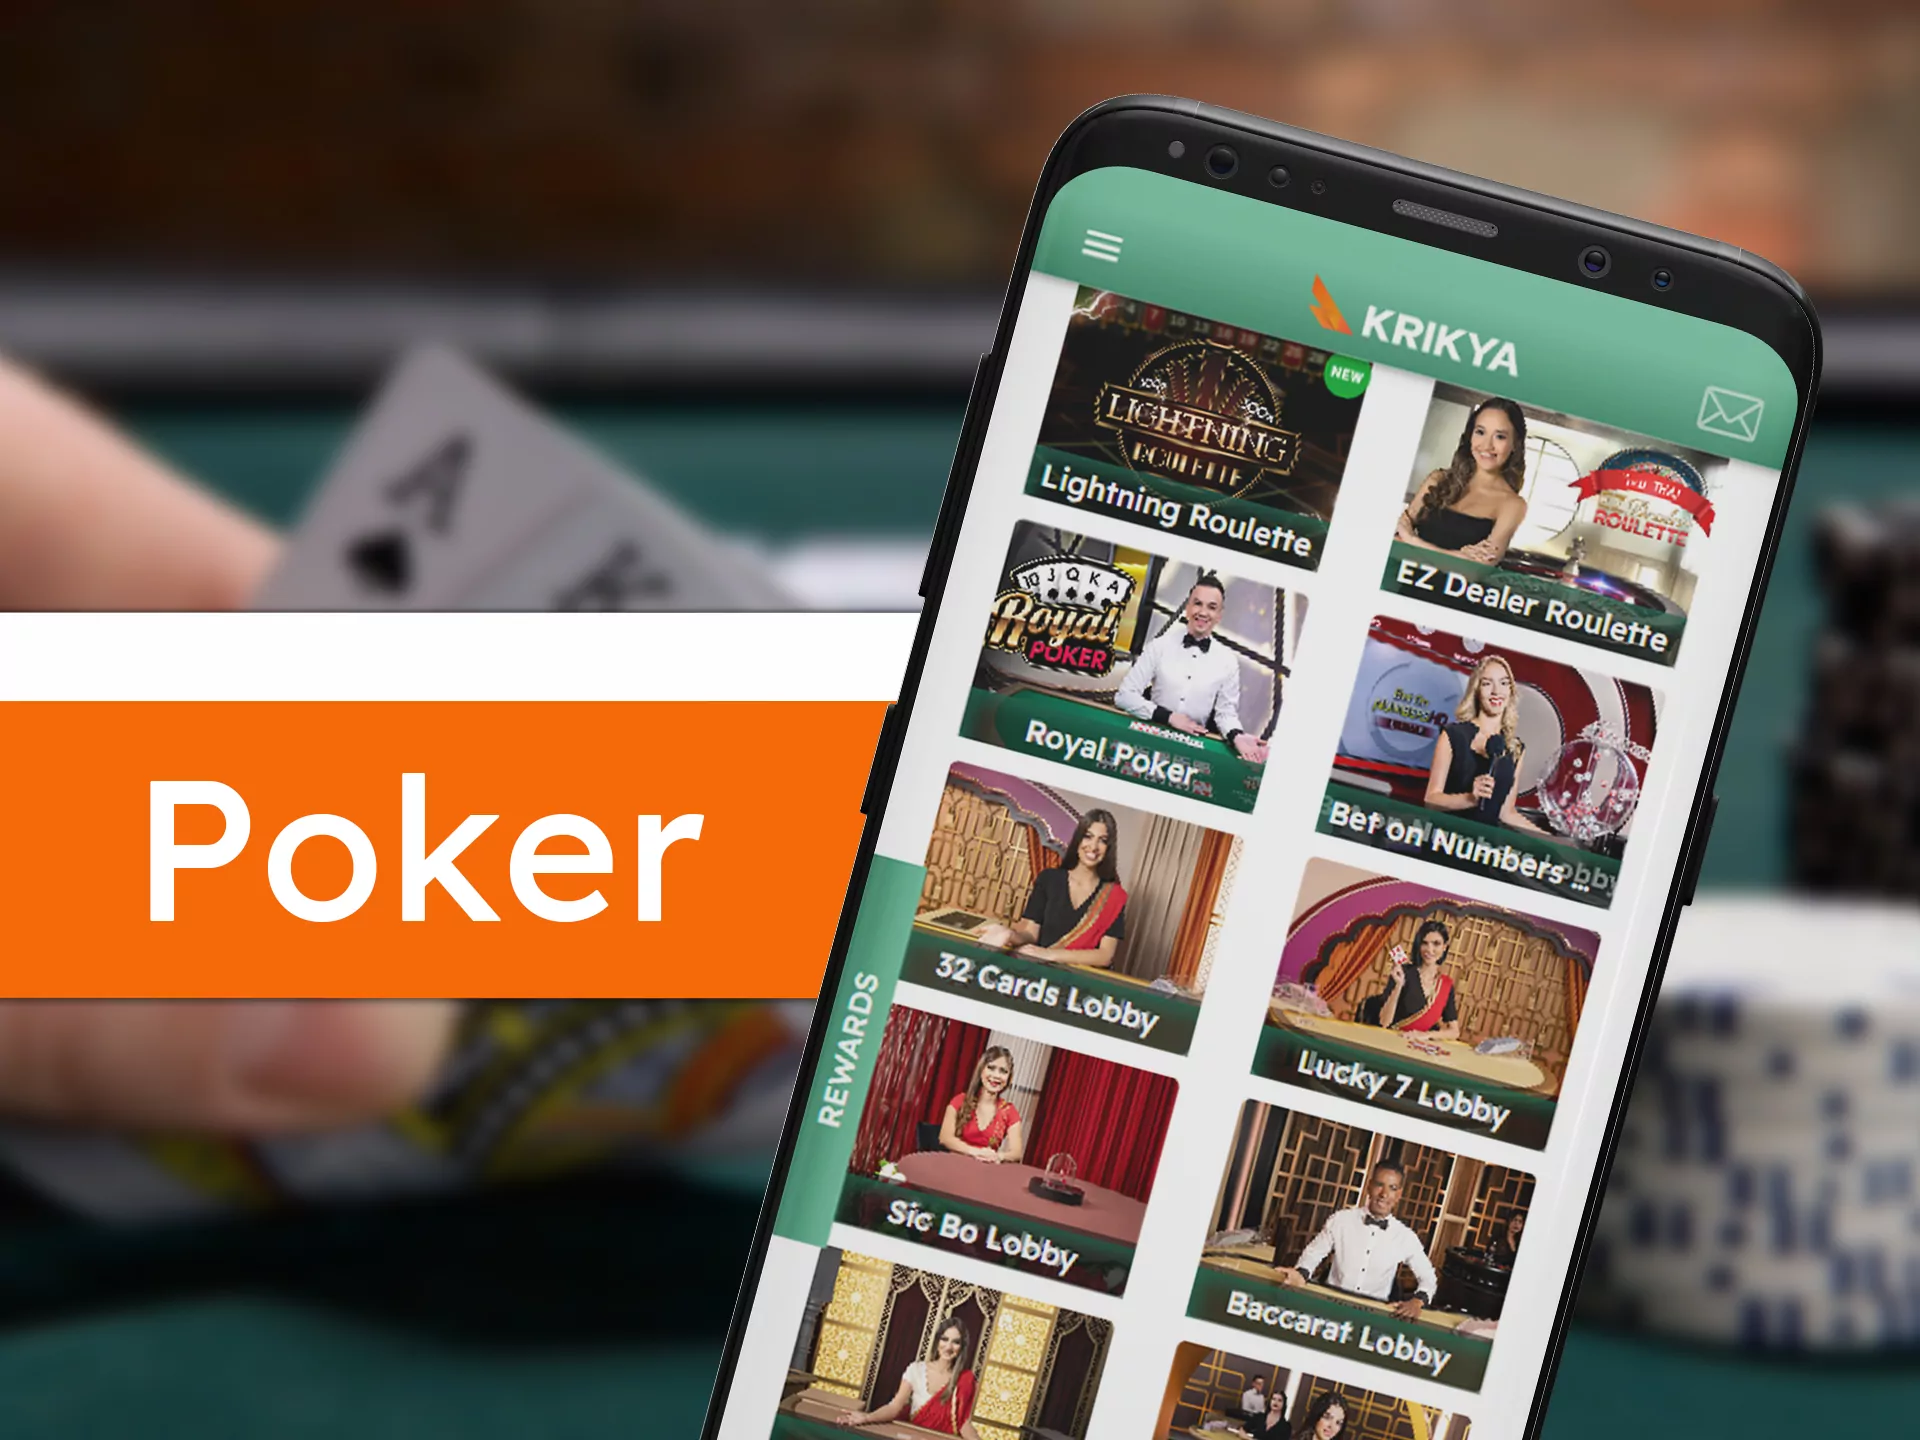 Play live poker games using Krikya app.